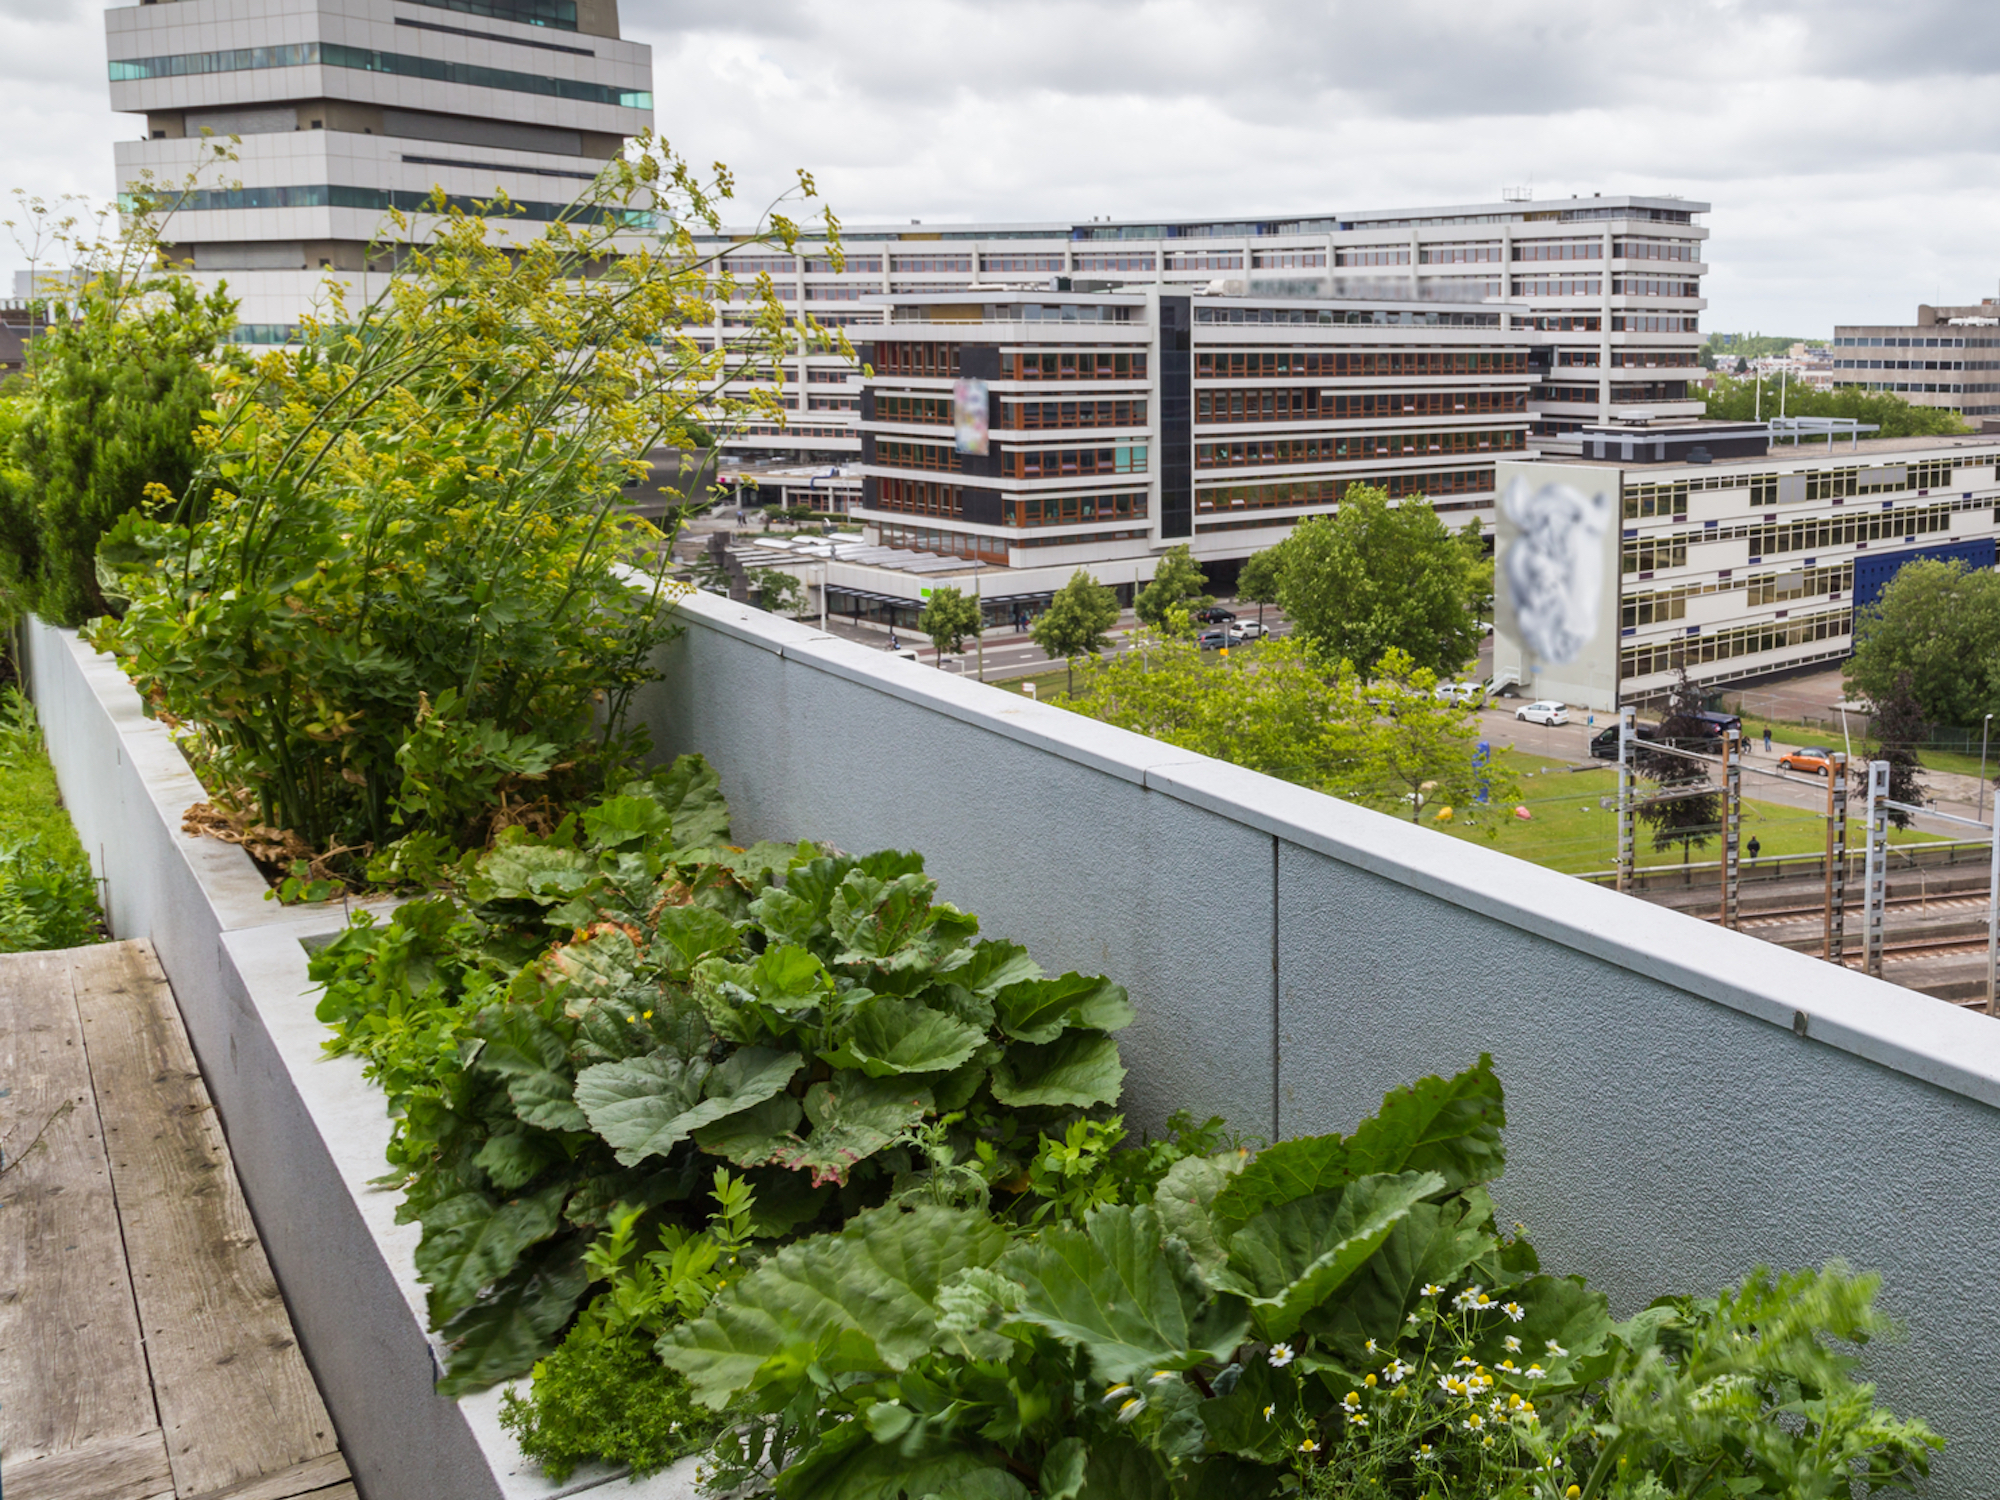 Carbon dioxide ventilation boosts rooftop garden yields